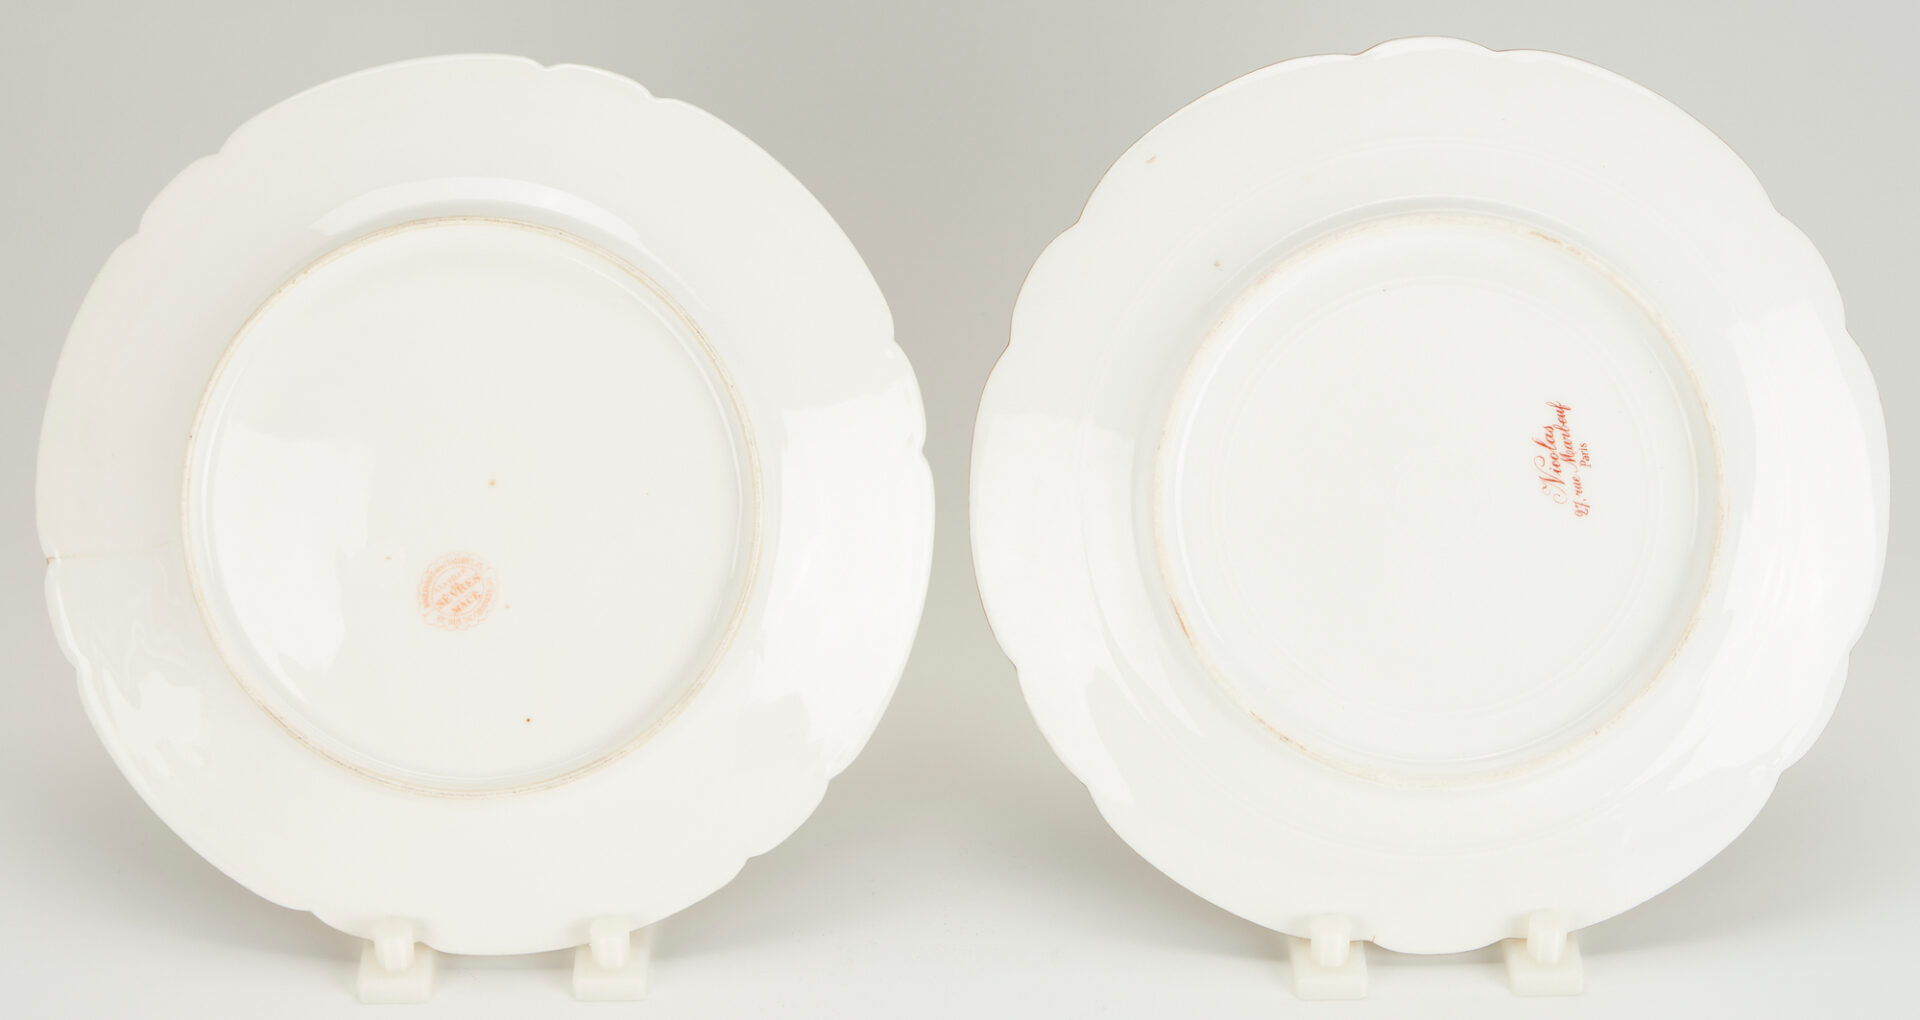 Lot 288: 106 Pcs. Sevres Mace Pink & Gilt Porcelain Dinnerware Set